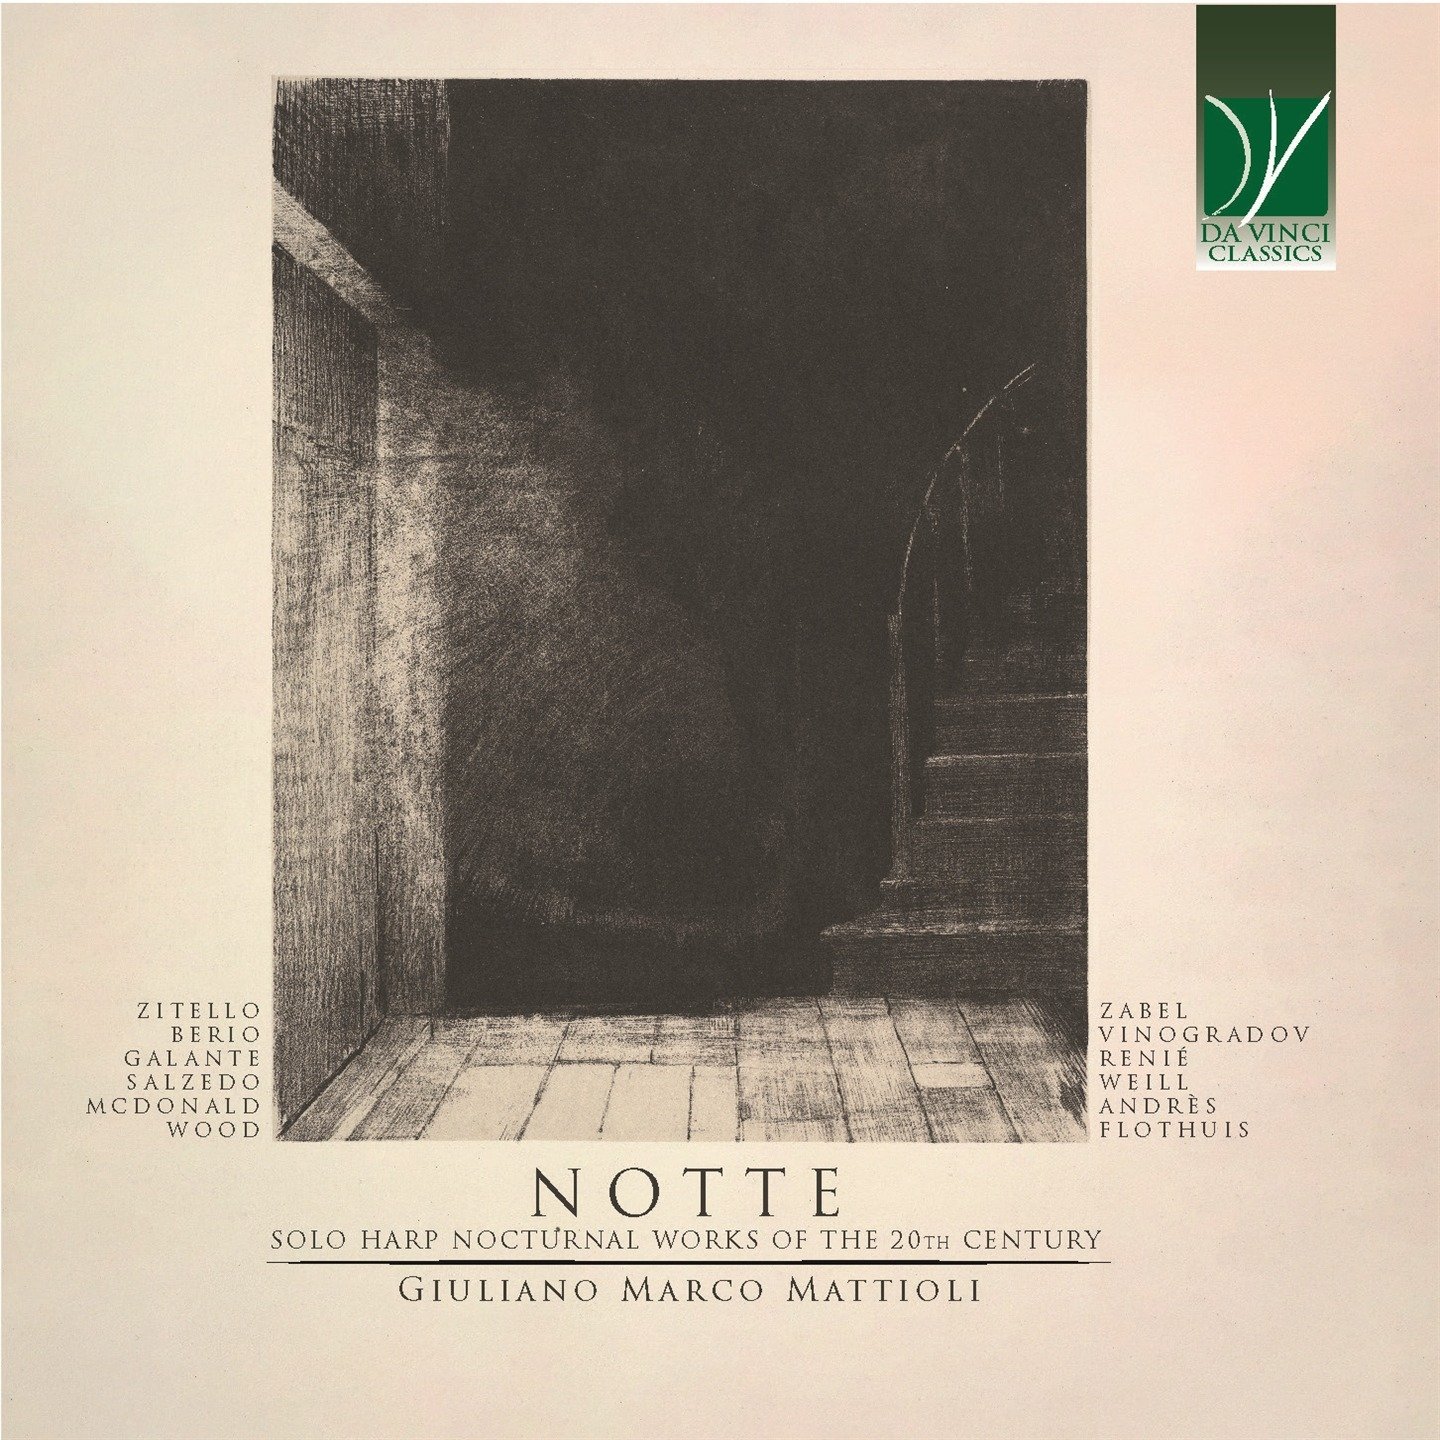 CD Shop - MATTIOLI, GIULIANO MARCO NOTTE - SOLO HARP NOCTURNAL WORKS OF THE 20TH CENTURY